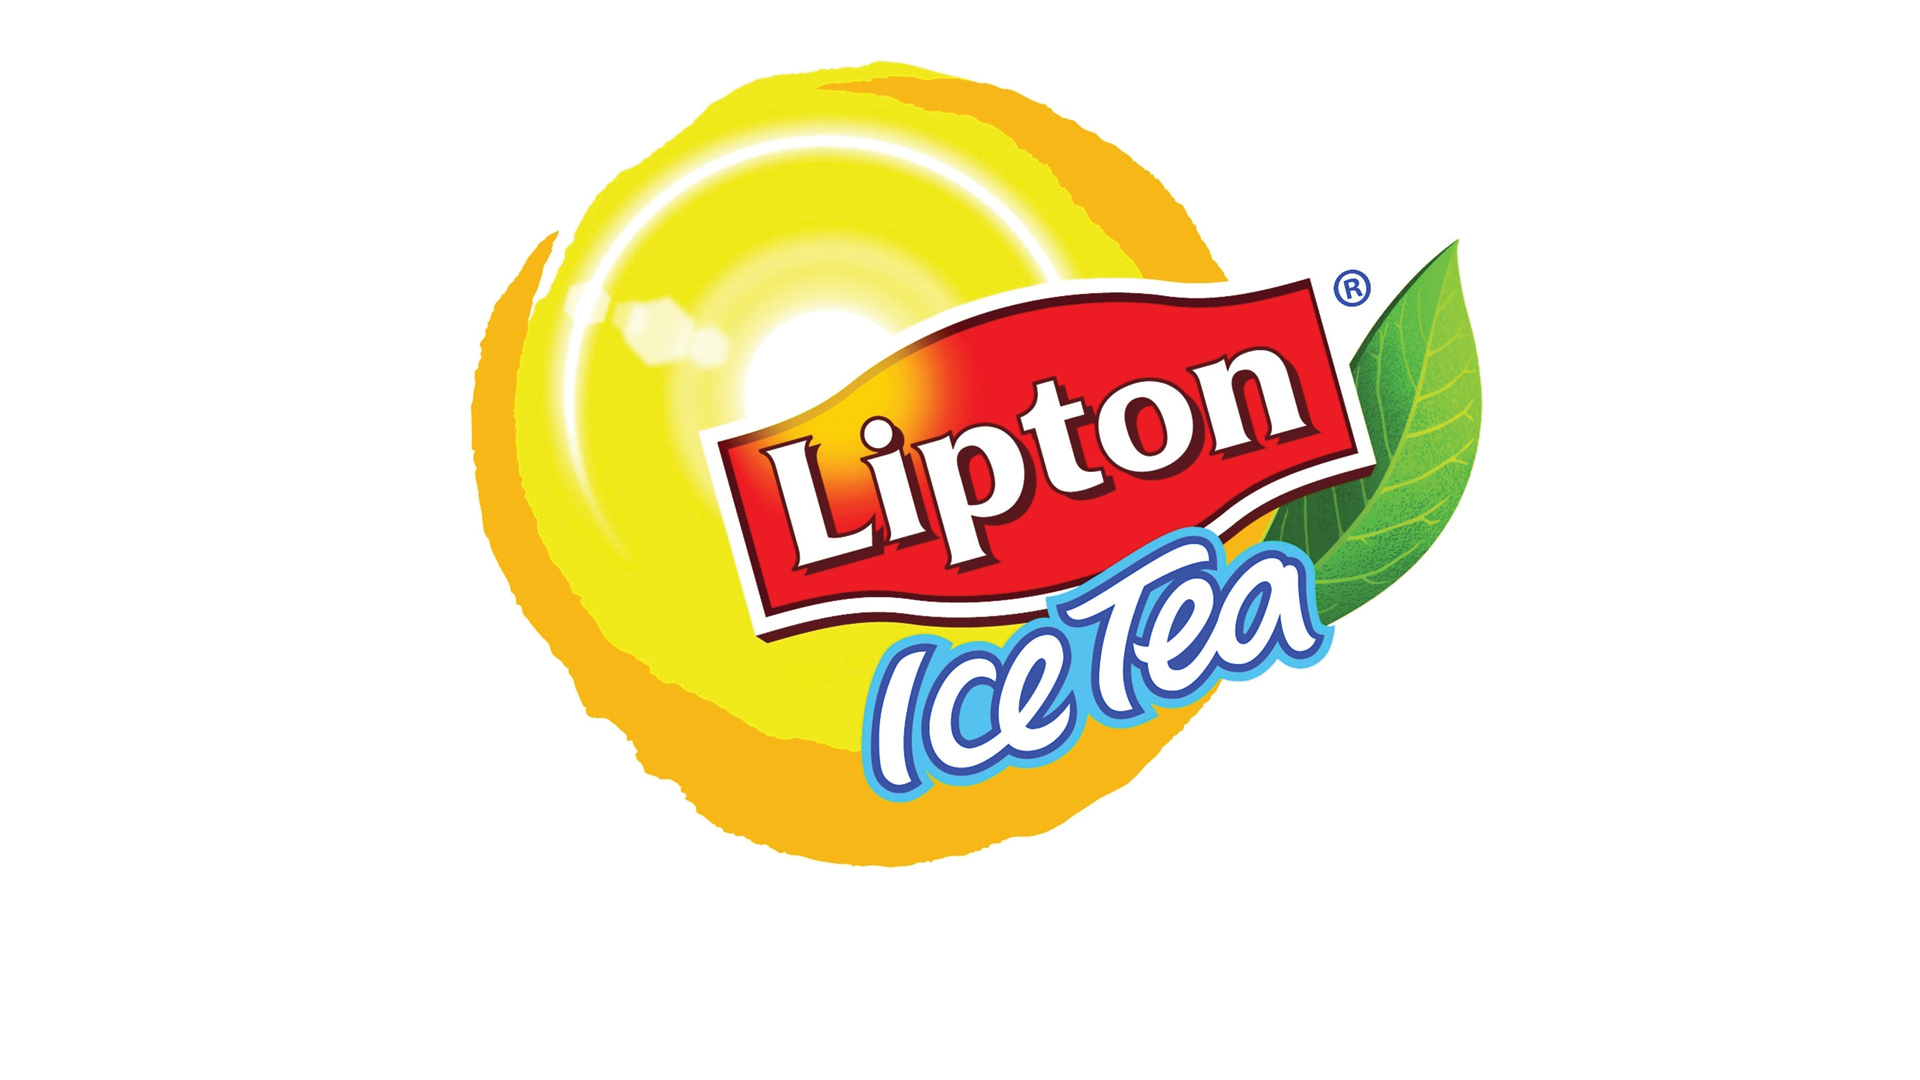 Lipton Logos